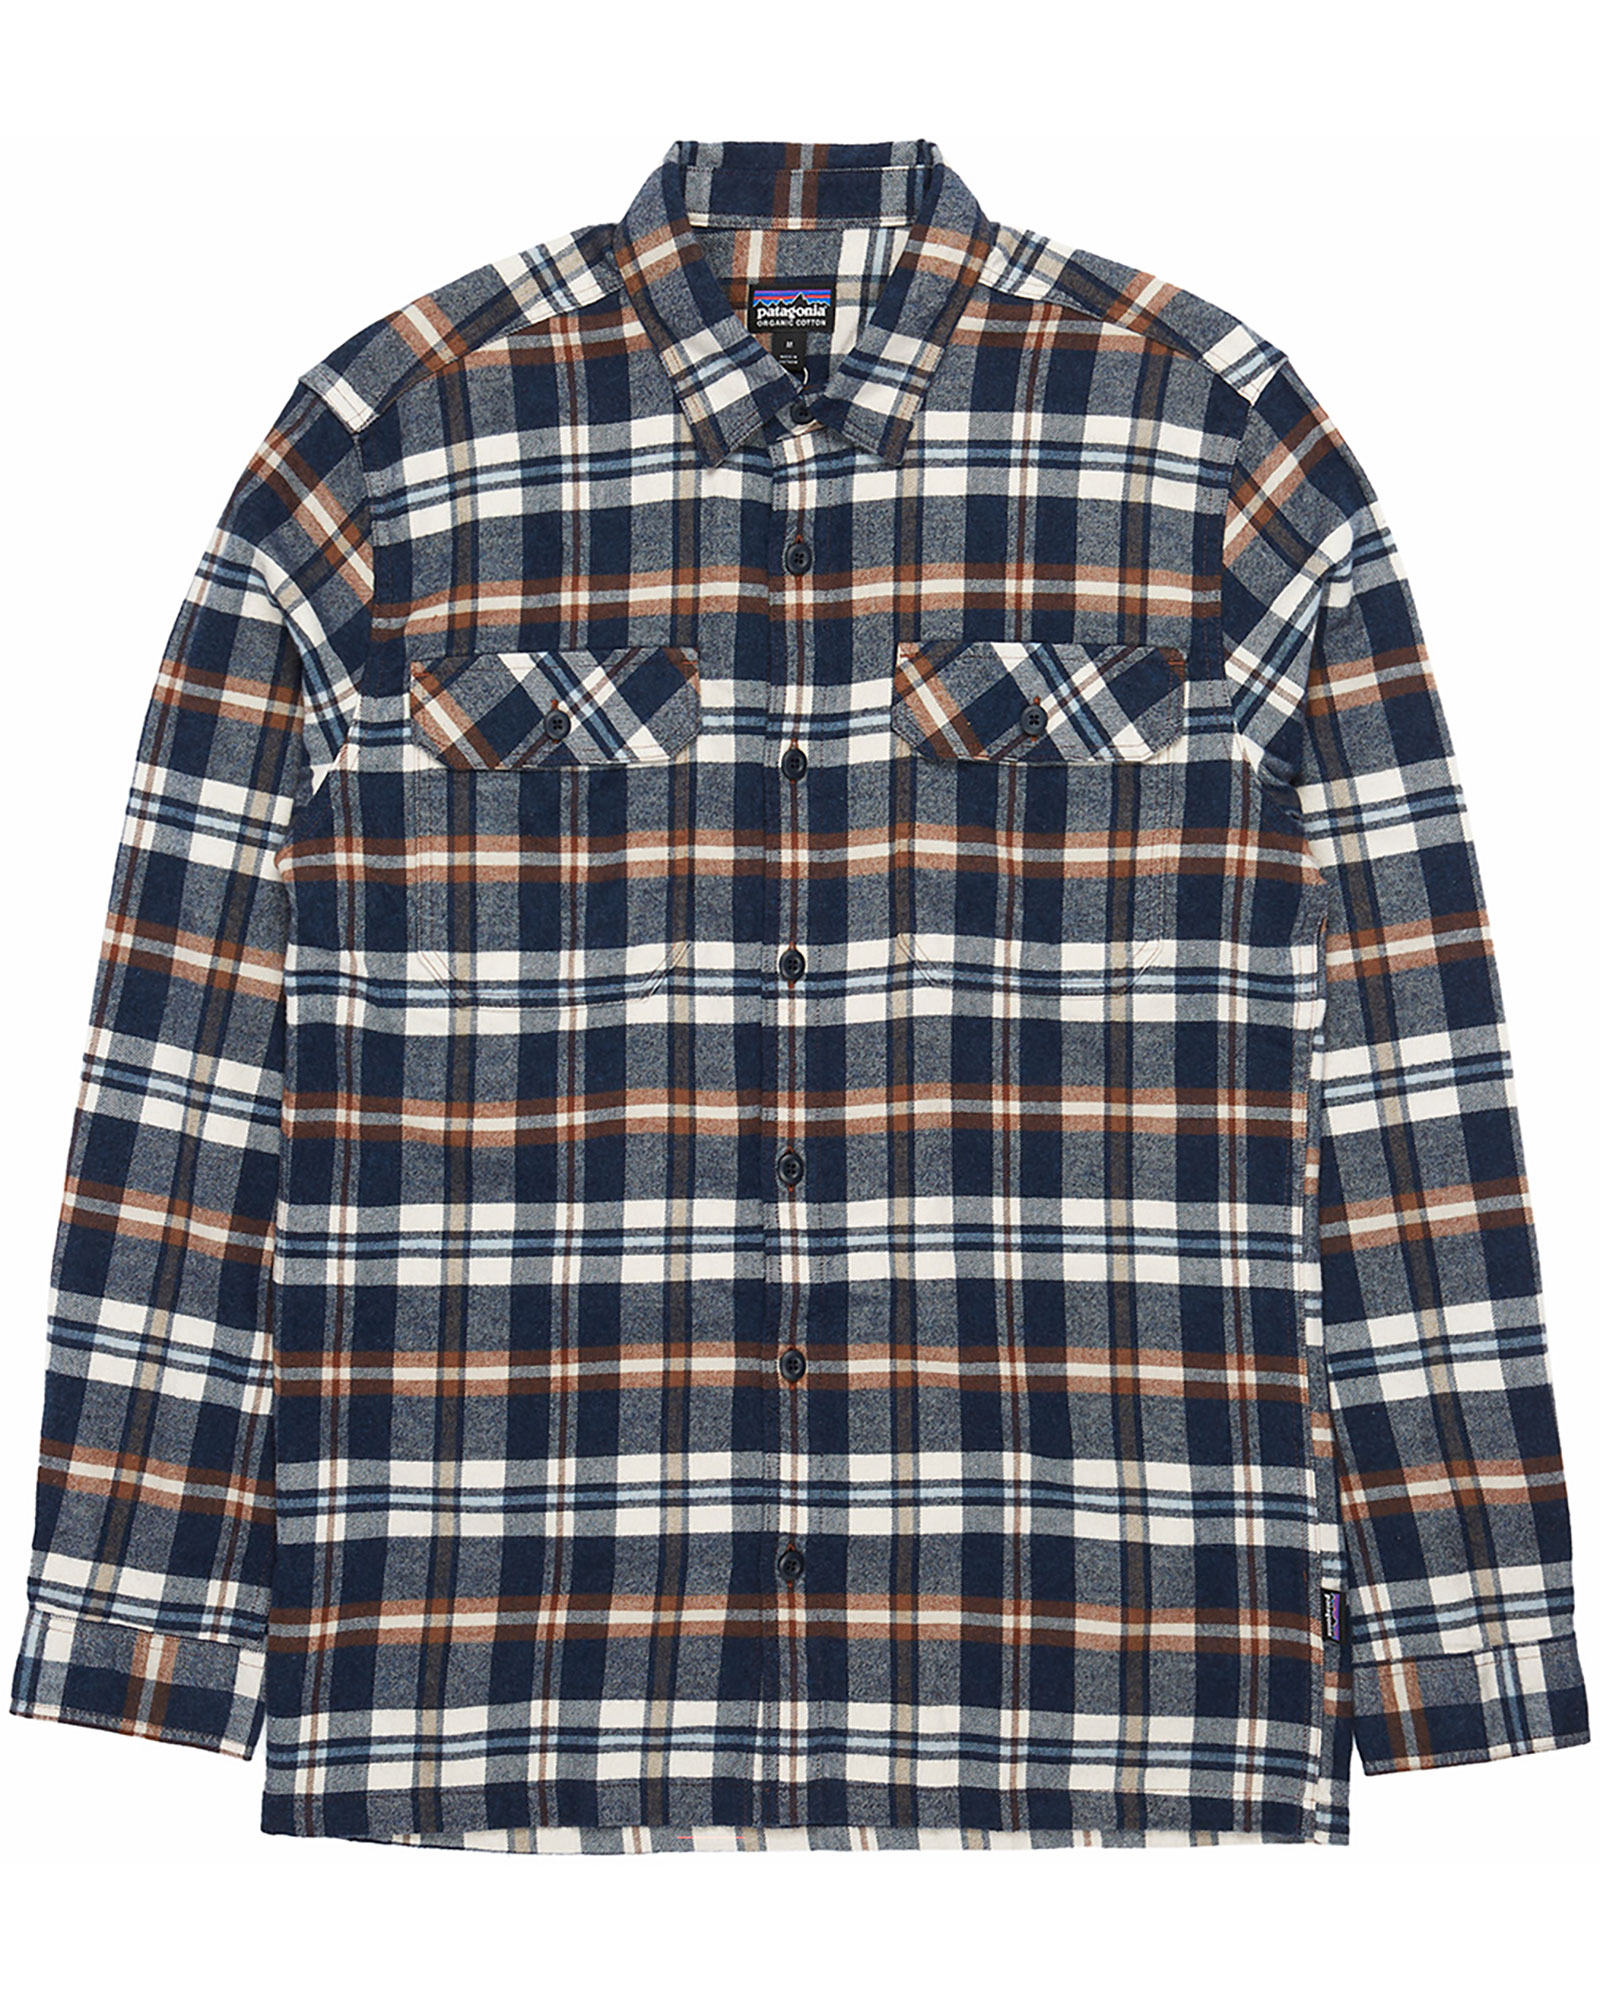 Patagonia Men’s Organic Long Sleeve Flannel Shirt - Brisk/Dolomite Blue XL